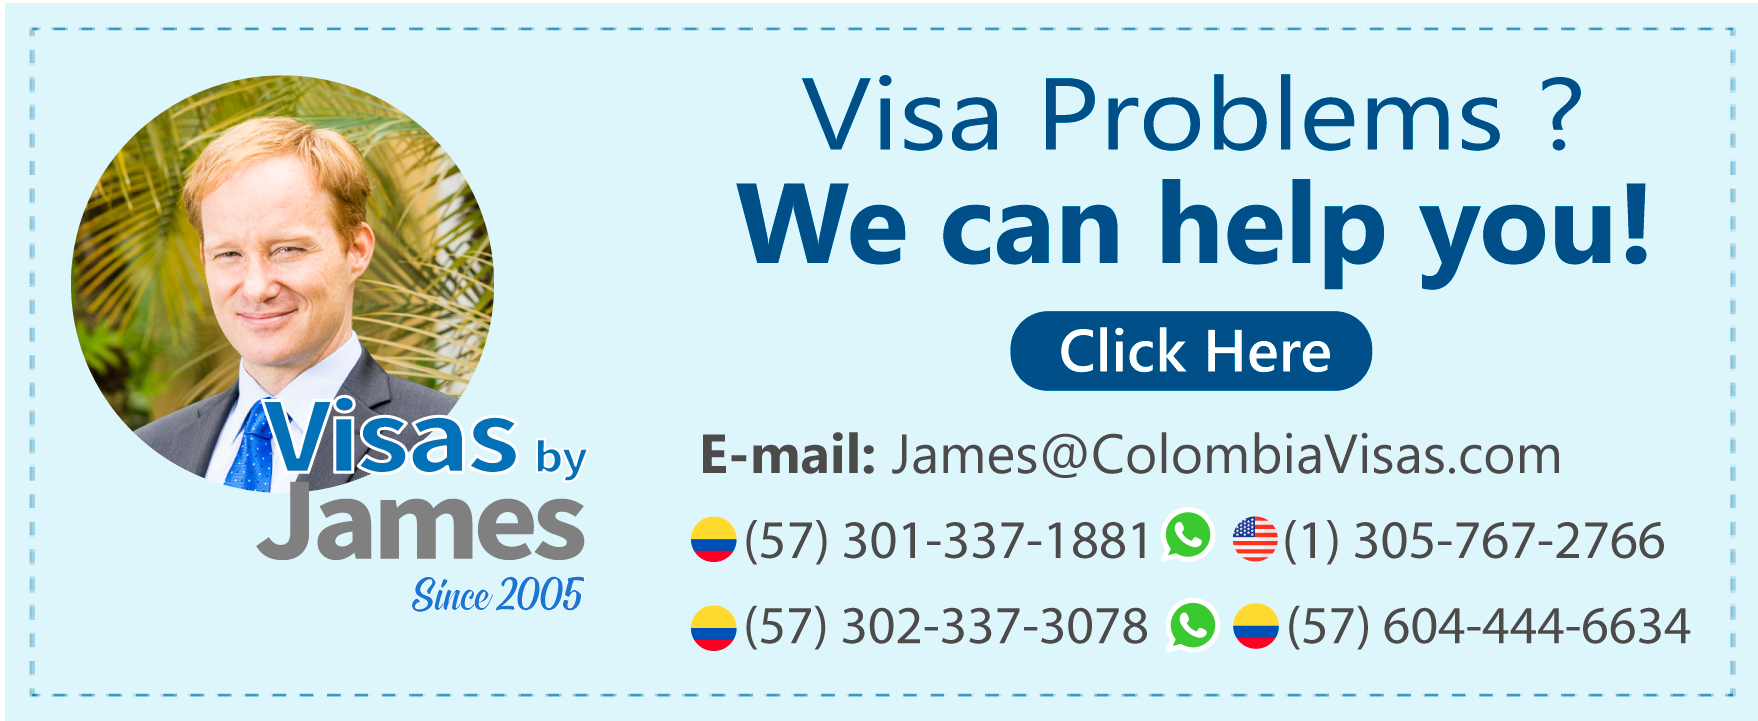 Visas by James Visa-Problems